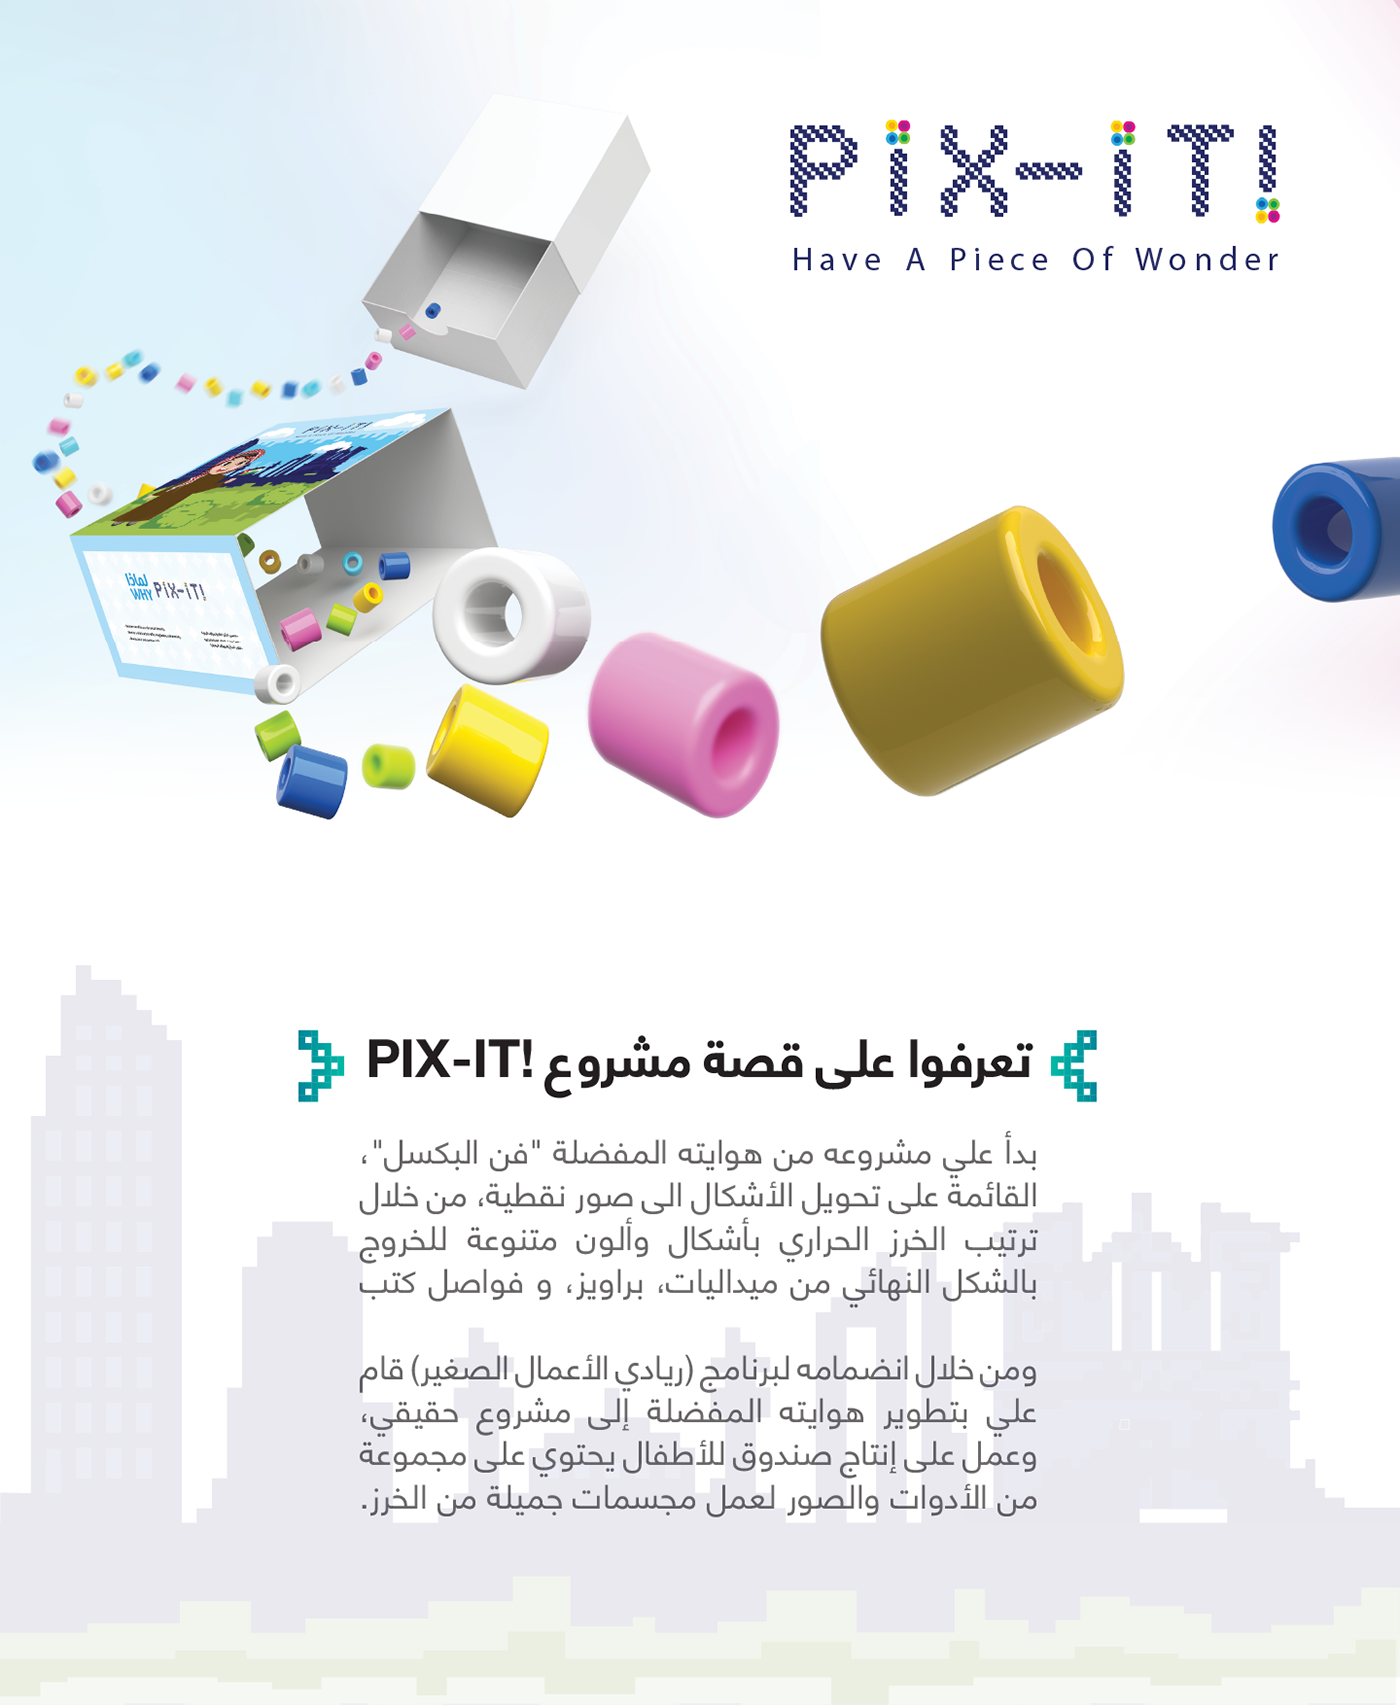 Arab box charchter Education game jordan package Packaging packaging design toy